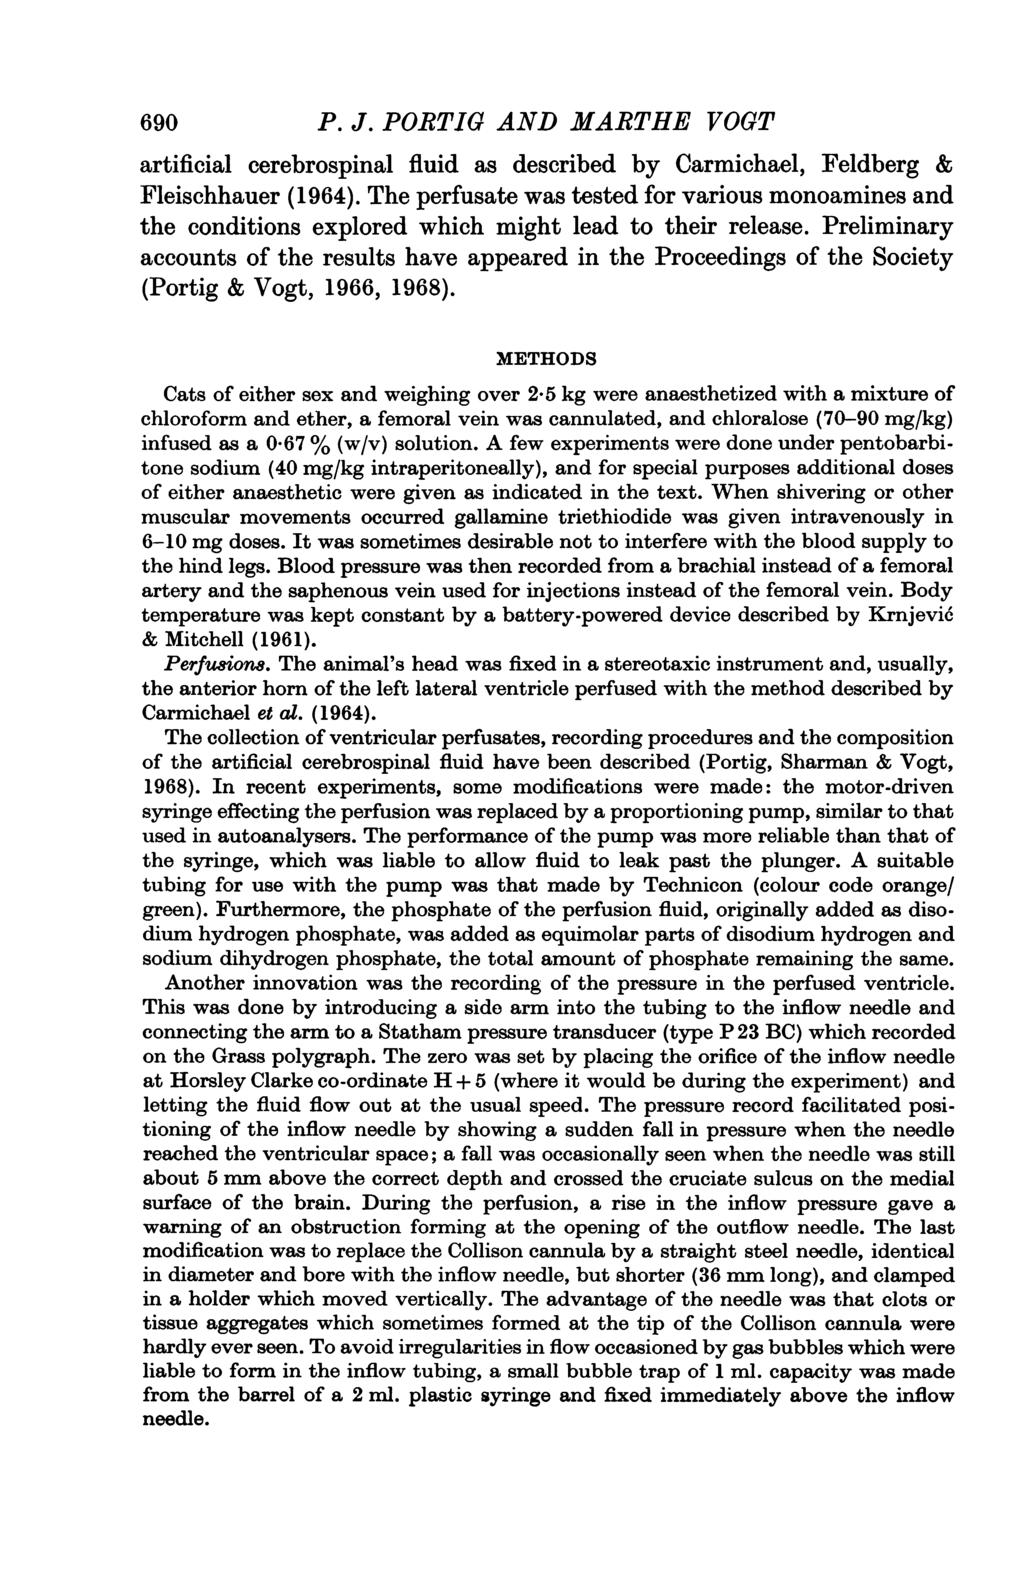 690 P. J. PORTIG AND MARTHE VOGT artificial cerebrospinal fluid as described by Carmichael, Feldberg & Fleischhauer (1964).